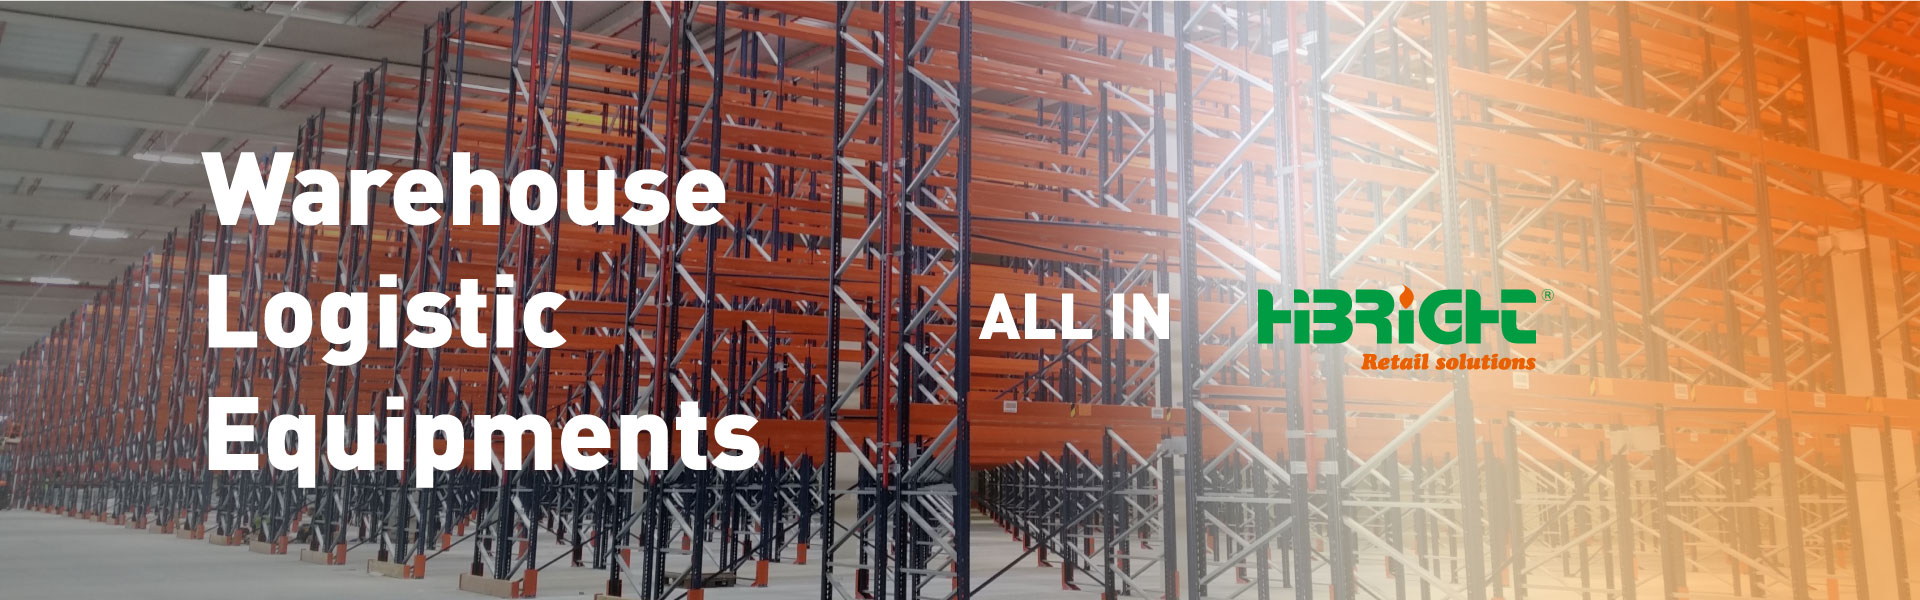 warehouse-logistics-equipment-warehouse-rack